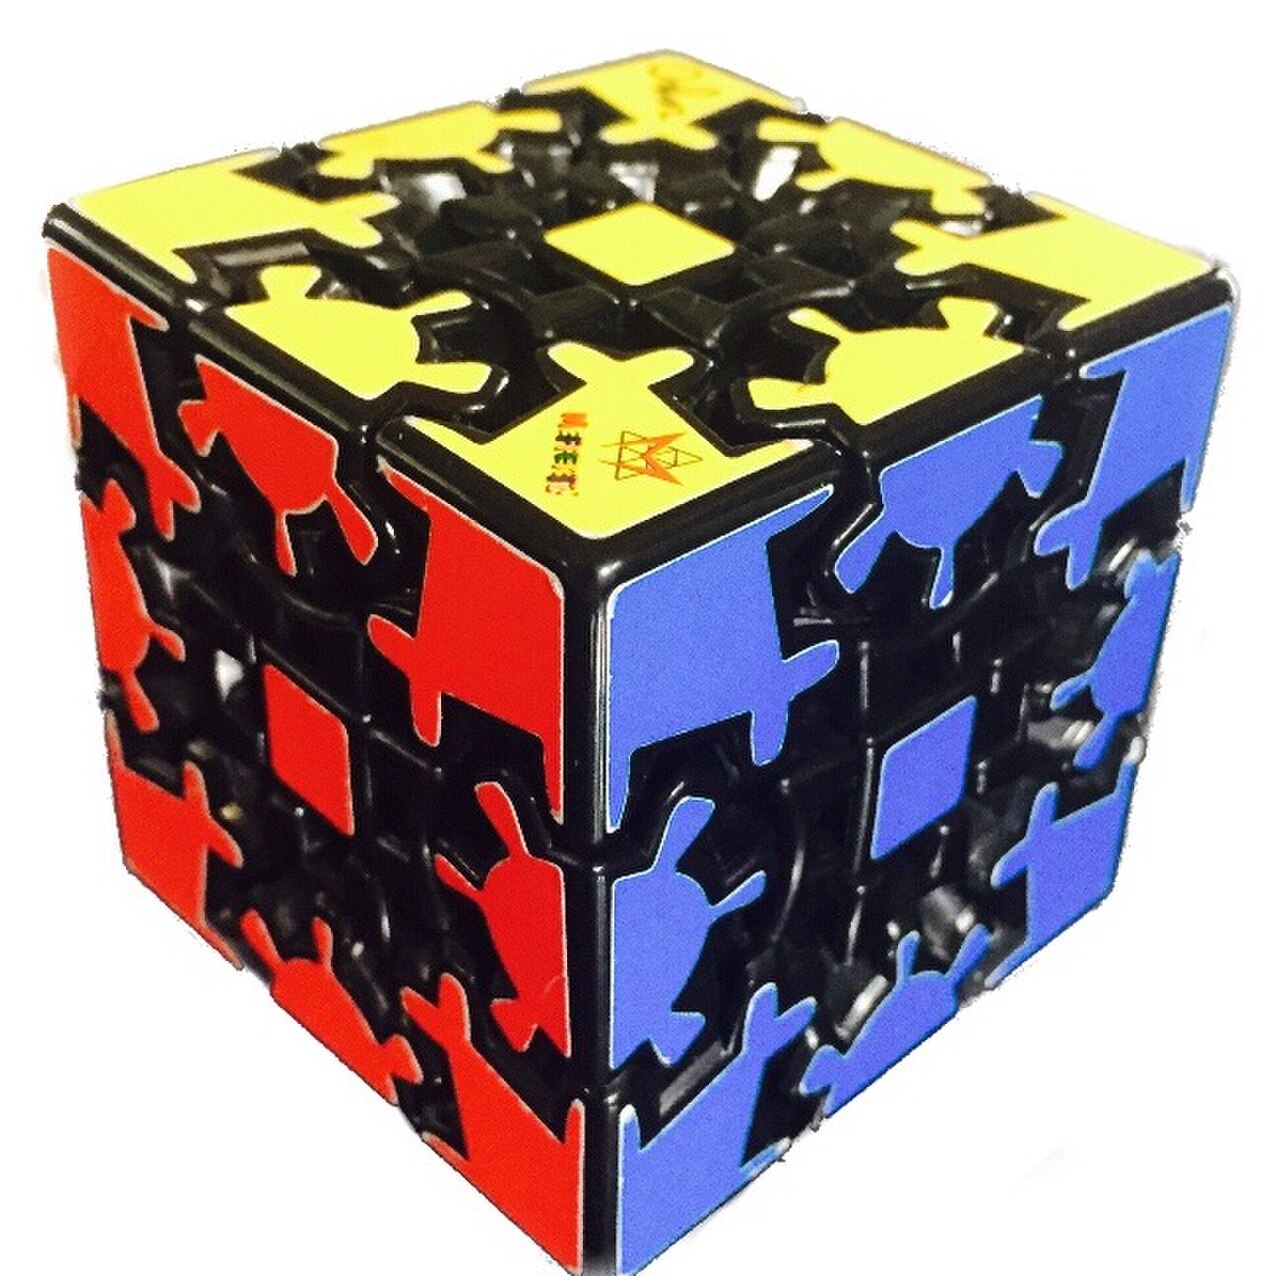 Gear cube. Головоломка Meffert's Gear Cube. Шестеренчатый кубик Рубика Cube Puzzle. Кубик Рубика Оскара Ван Девентера. Гир Кьюб ГИРЭТ.